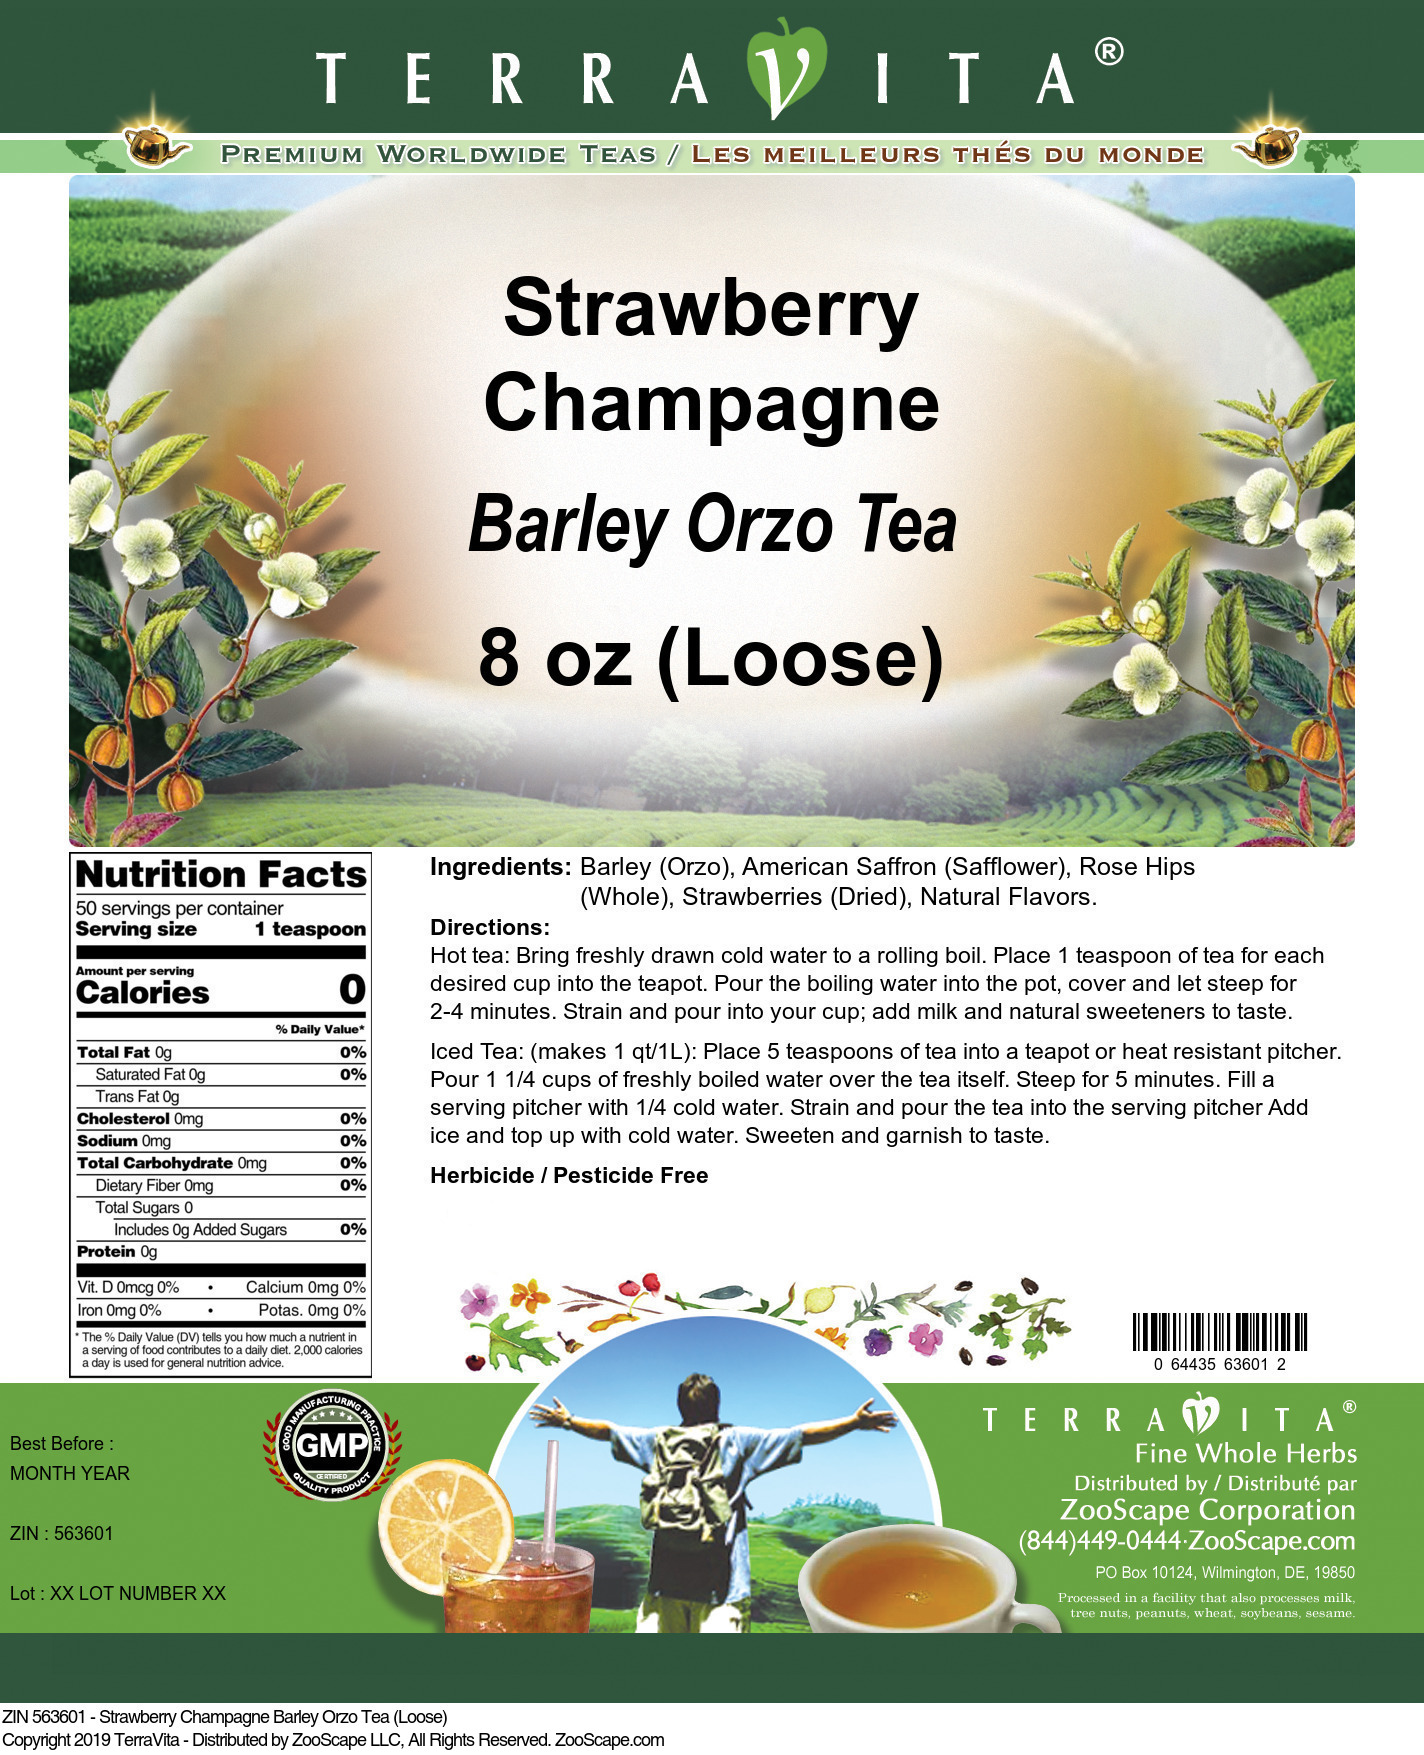 Strawberry Champagne Barley Orzo Tea (Loose) - Label